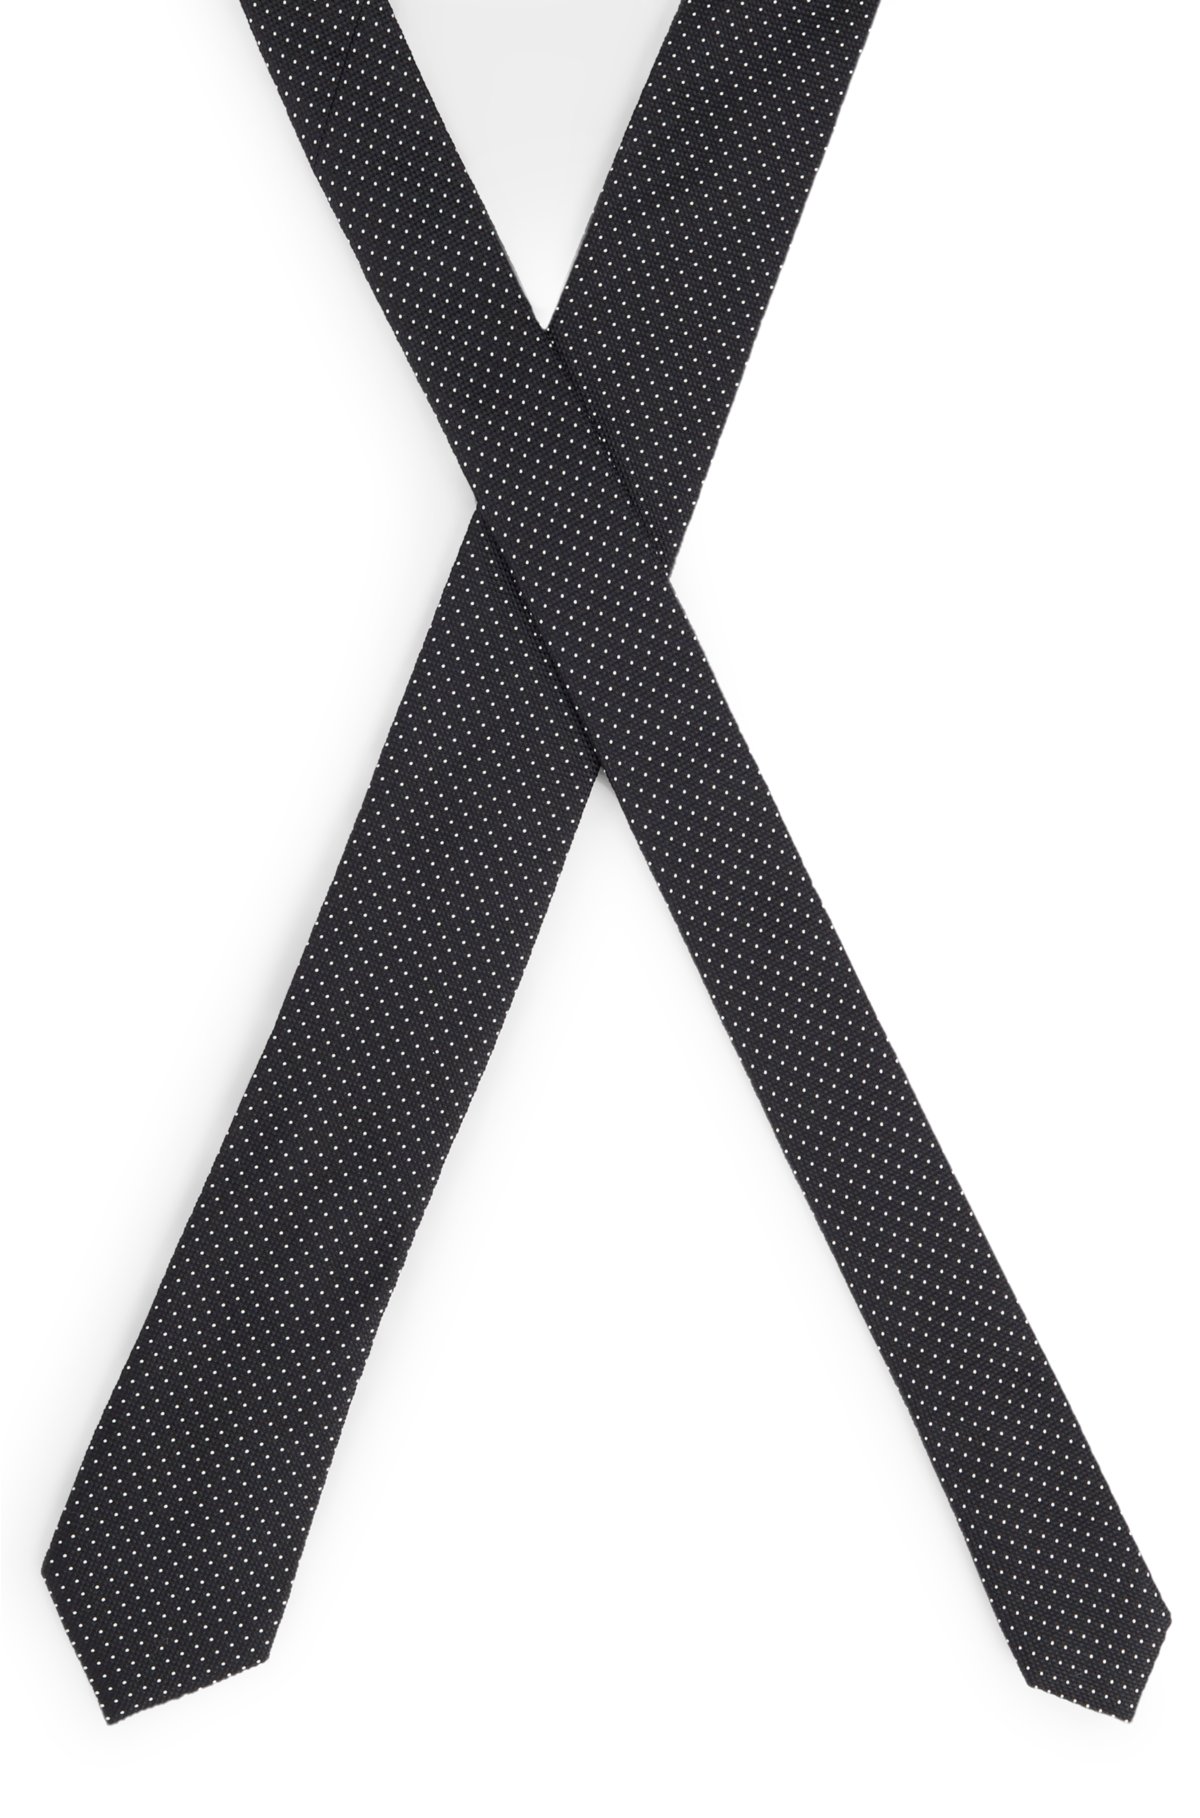 HUGO - Krawatte aus mit Seide reiner Jacquard-Muster